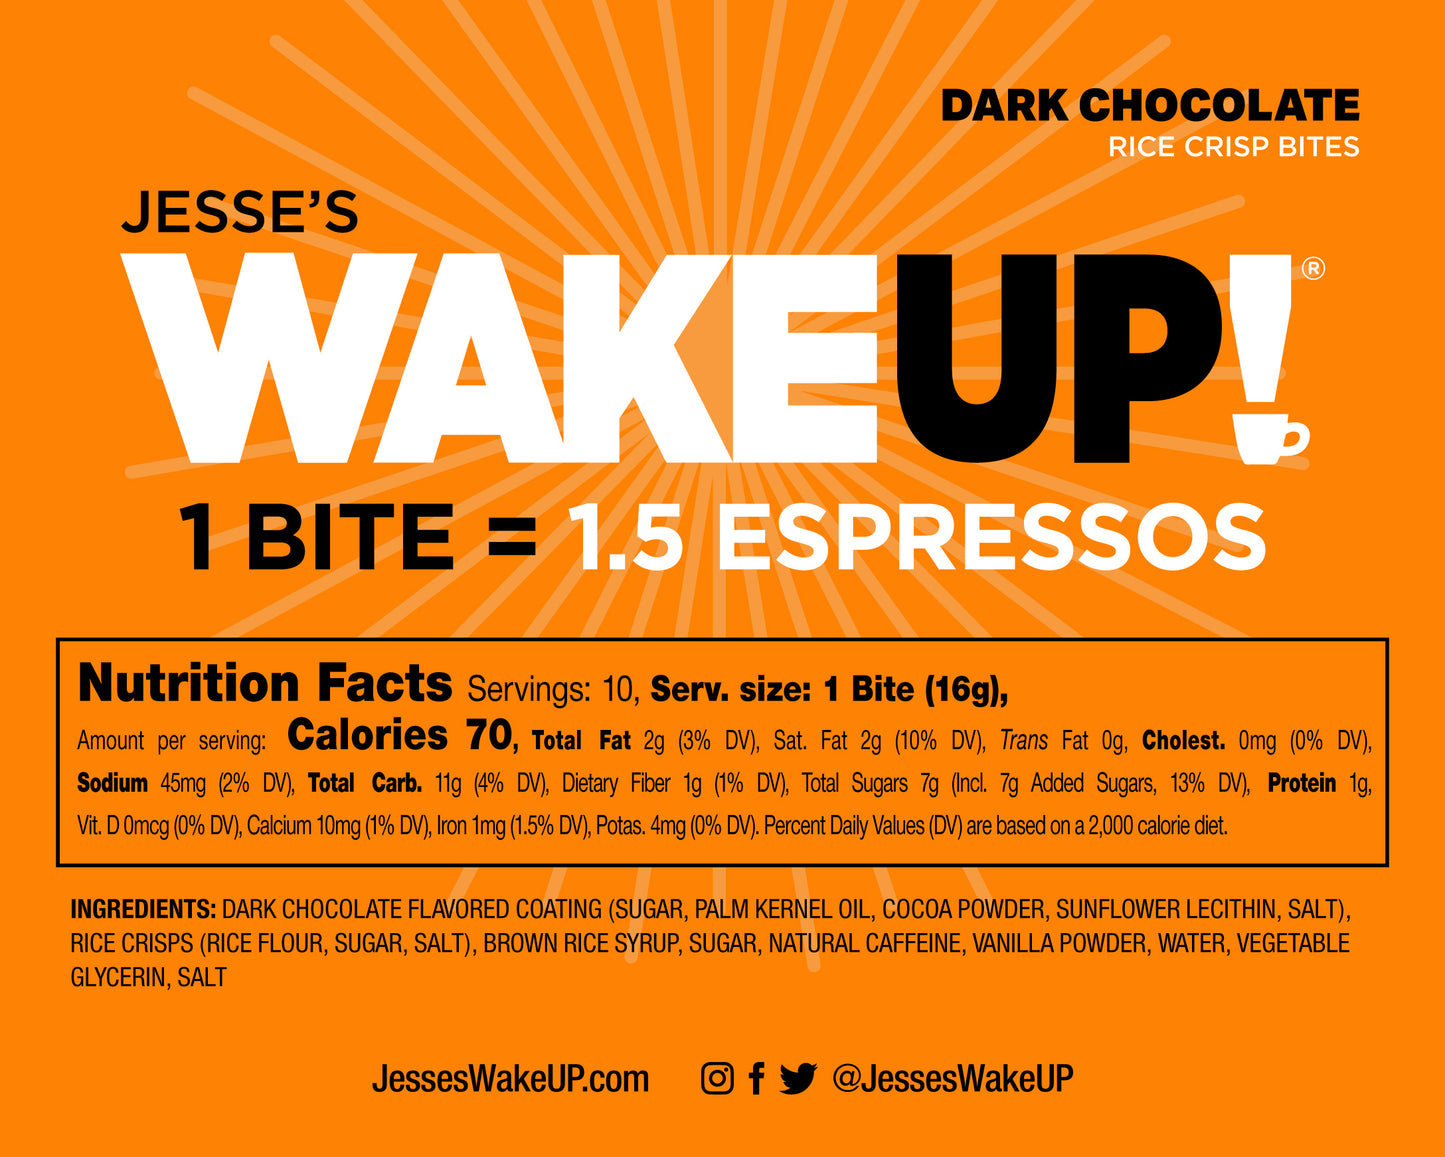 WakeUP! Chocolate Bites (1 Bite = 1.5 Espressos)